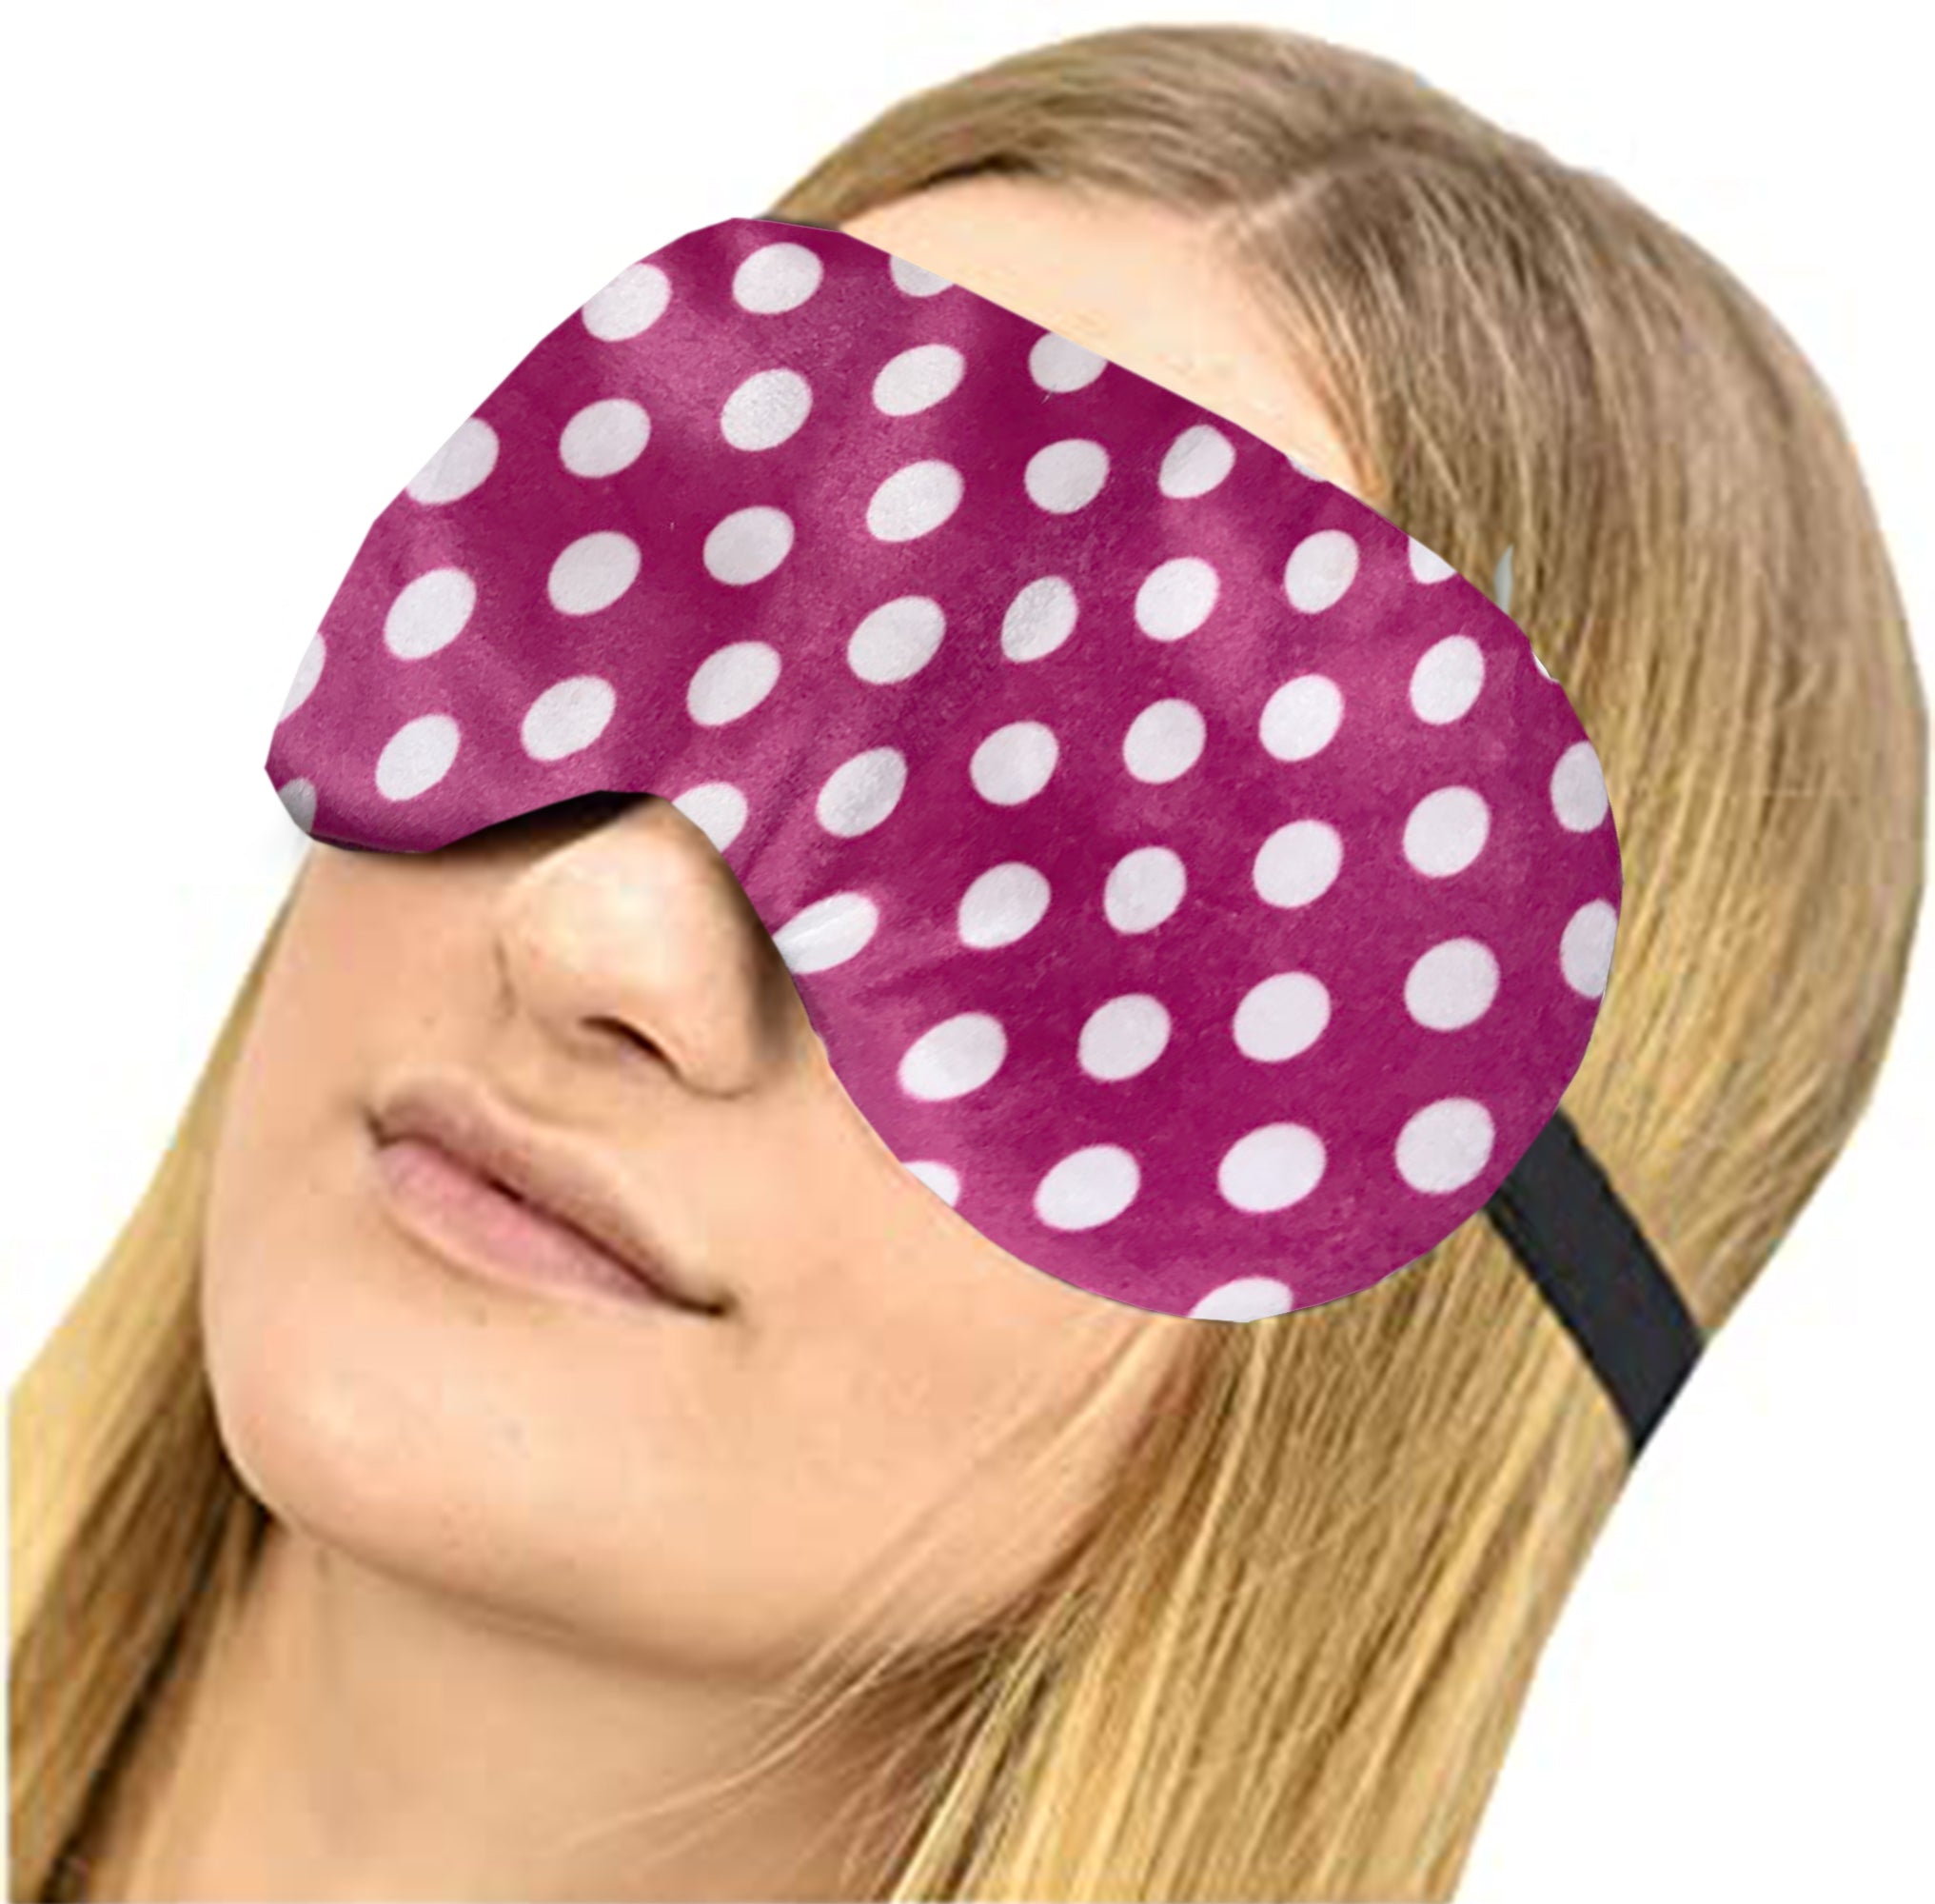 Lushomes Sleep Eyemasks-Single Pc , Pink Polka Dot Design, Light Blocking Sleep Mask, Soft and Comfortable Night Eye Mask for Men Women, Eye Blinder for Travel/Sleeping/Shift Work (Pack of 1)